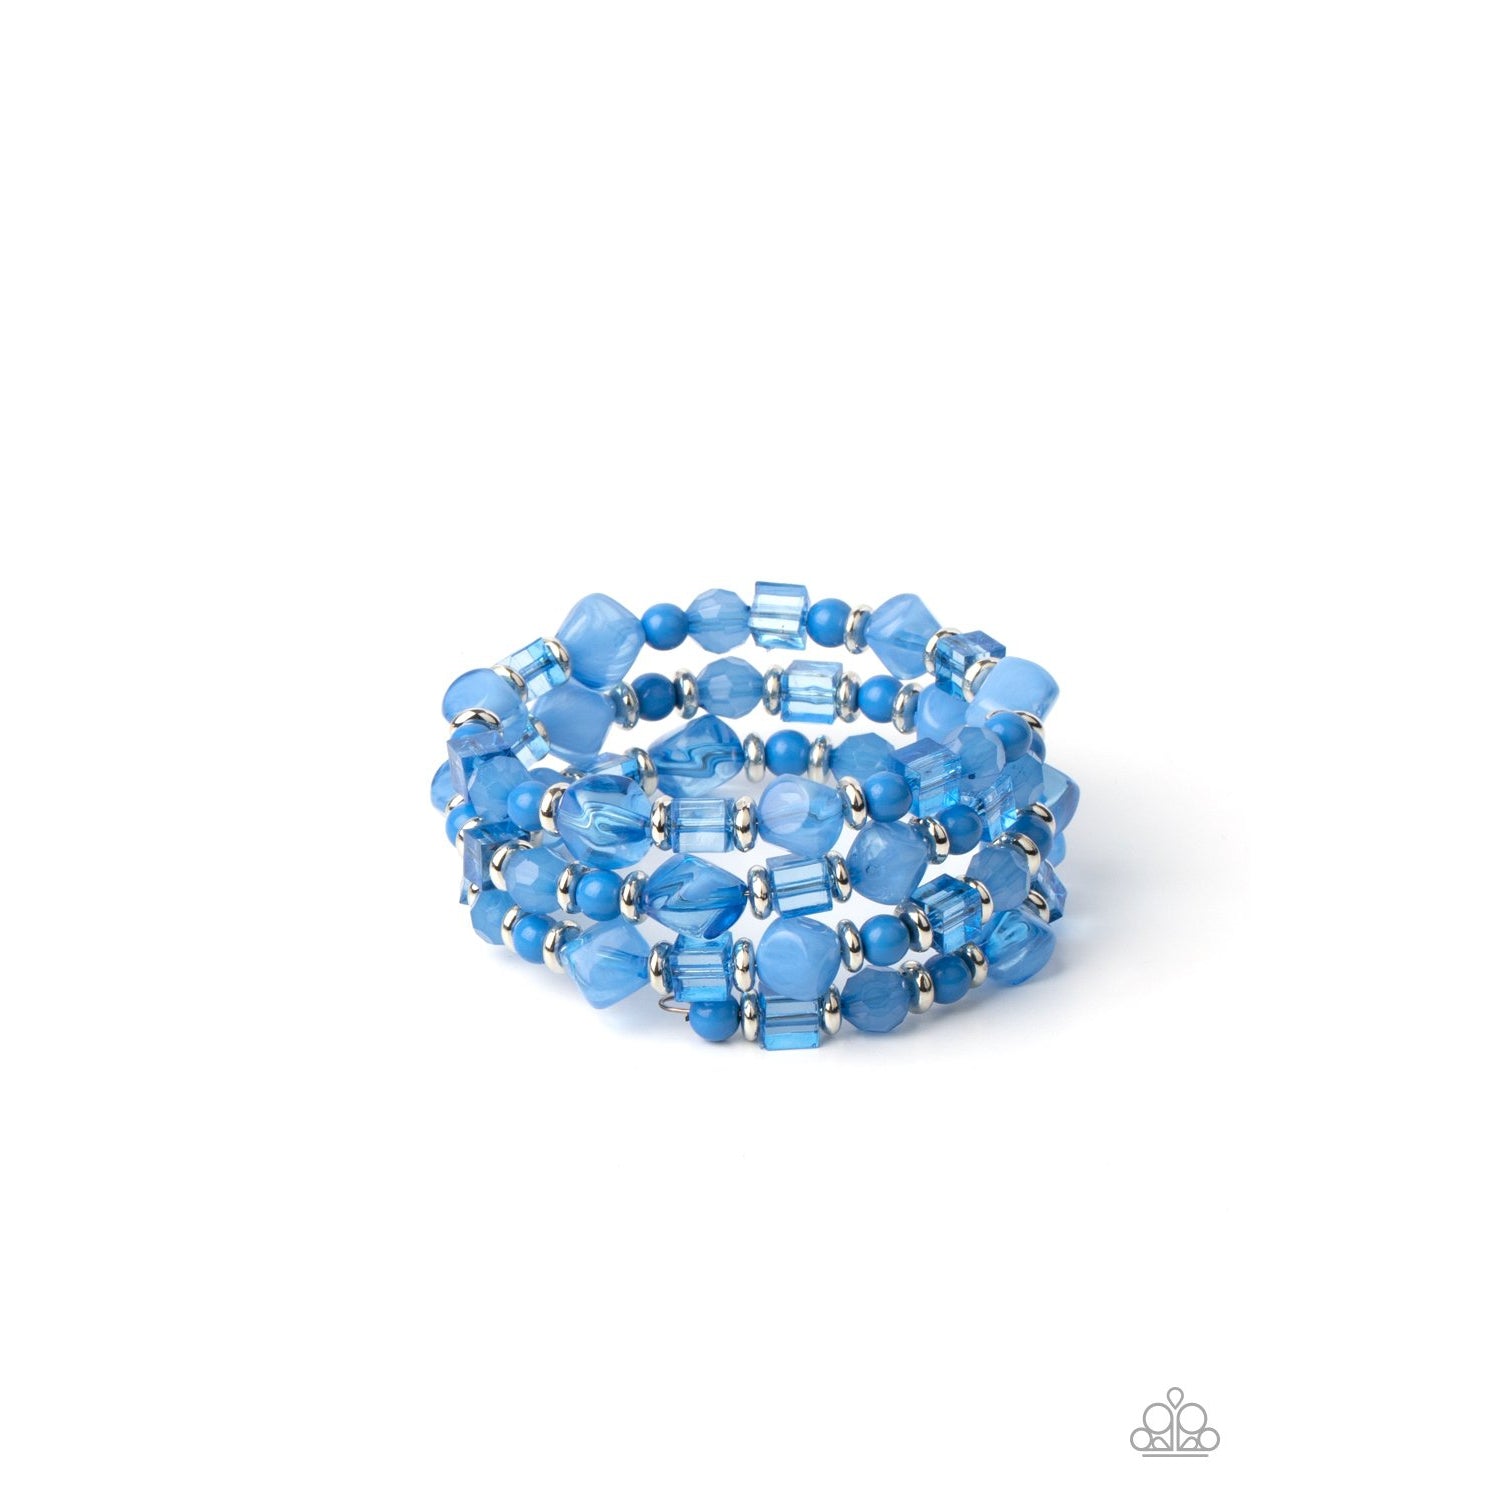 Girly Girl Glimmer - French Blue Bracelet - Paparazzi - GlaMarous Titi Jewels